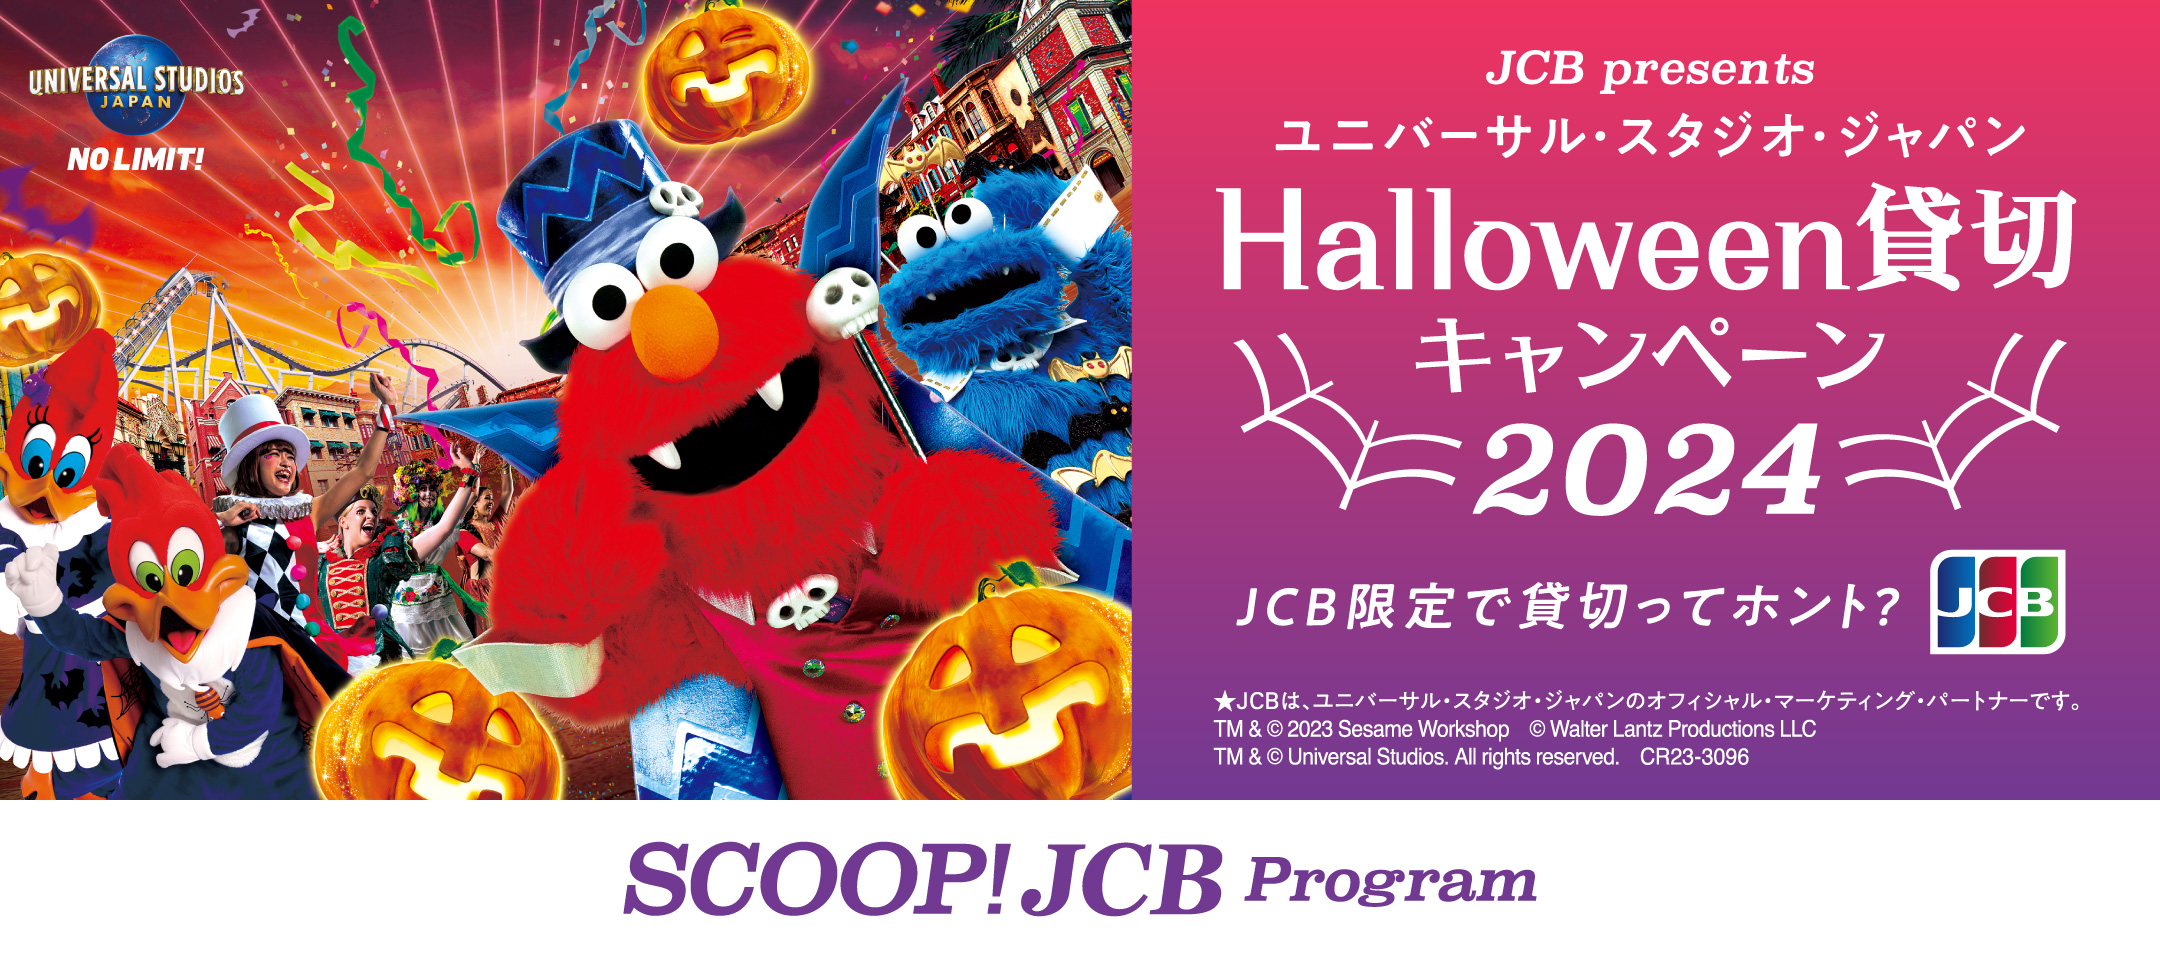 【JCB presents】ユニバーサル･スタジオ･ジャパン ハロウィーン貸切キャンペーン 2023